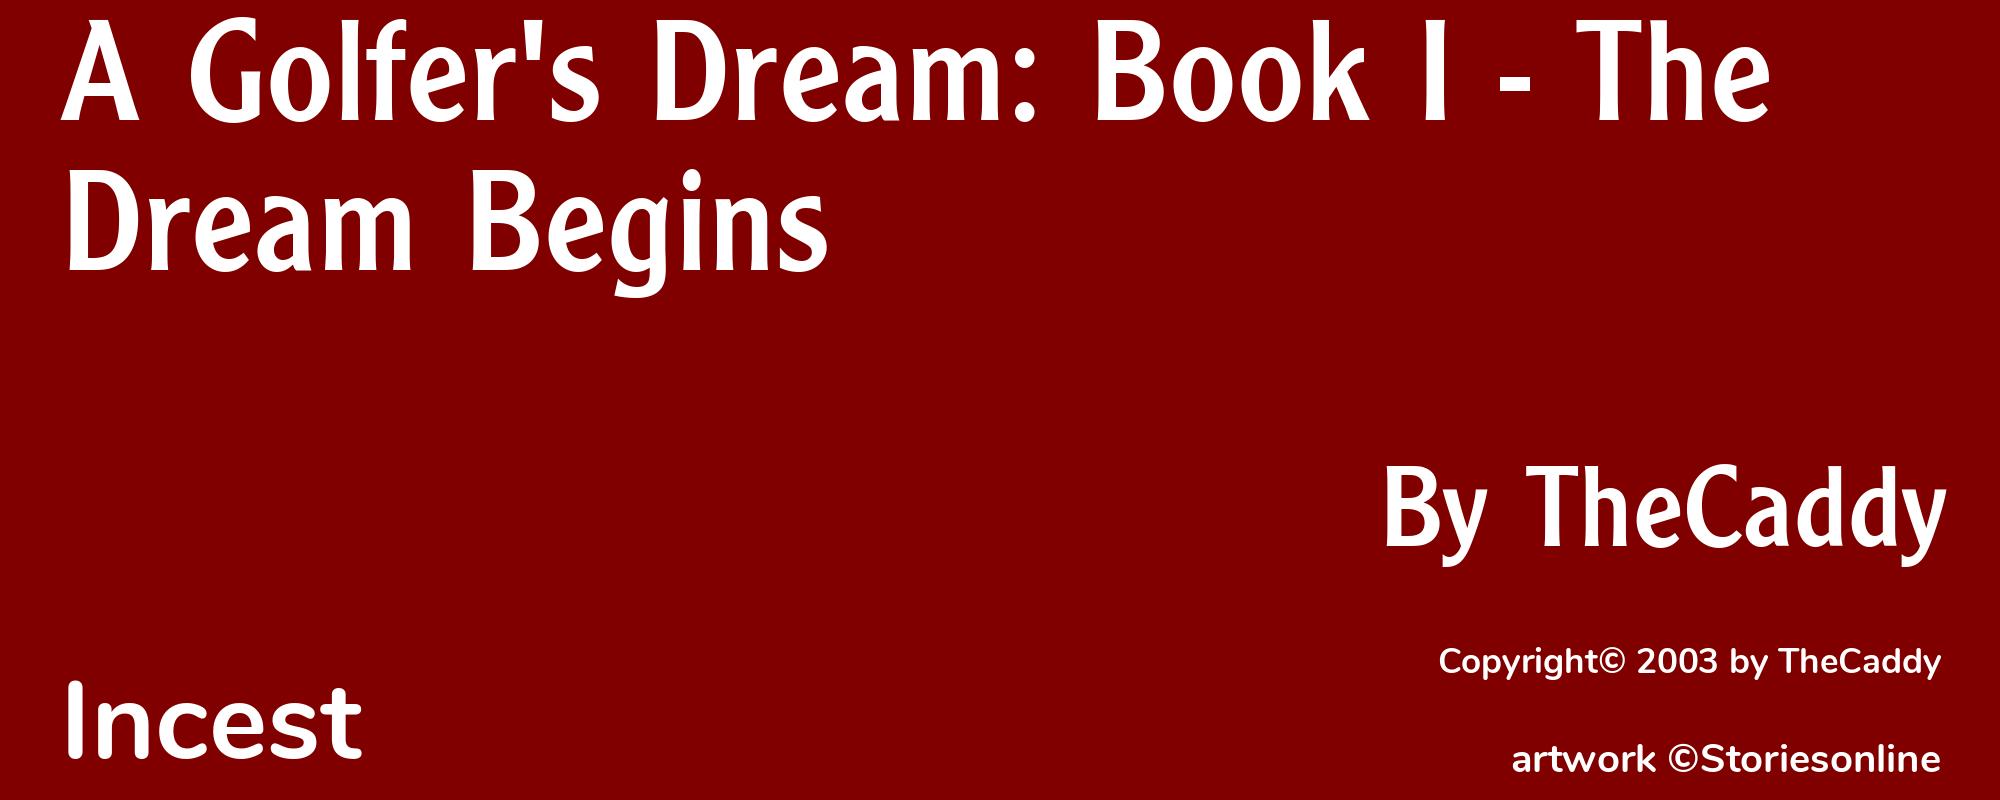 A Golfer's Dream: Book I - The Dream Begins - Cover